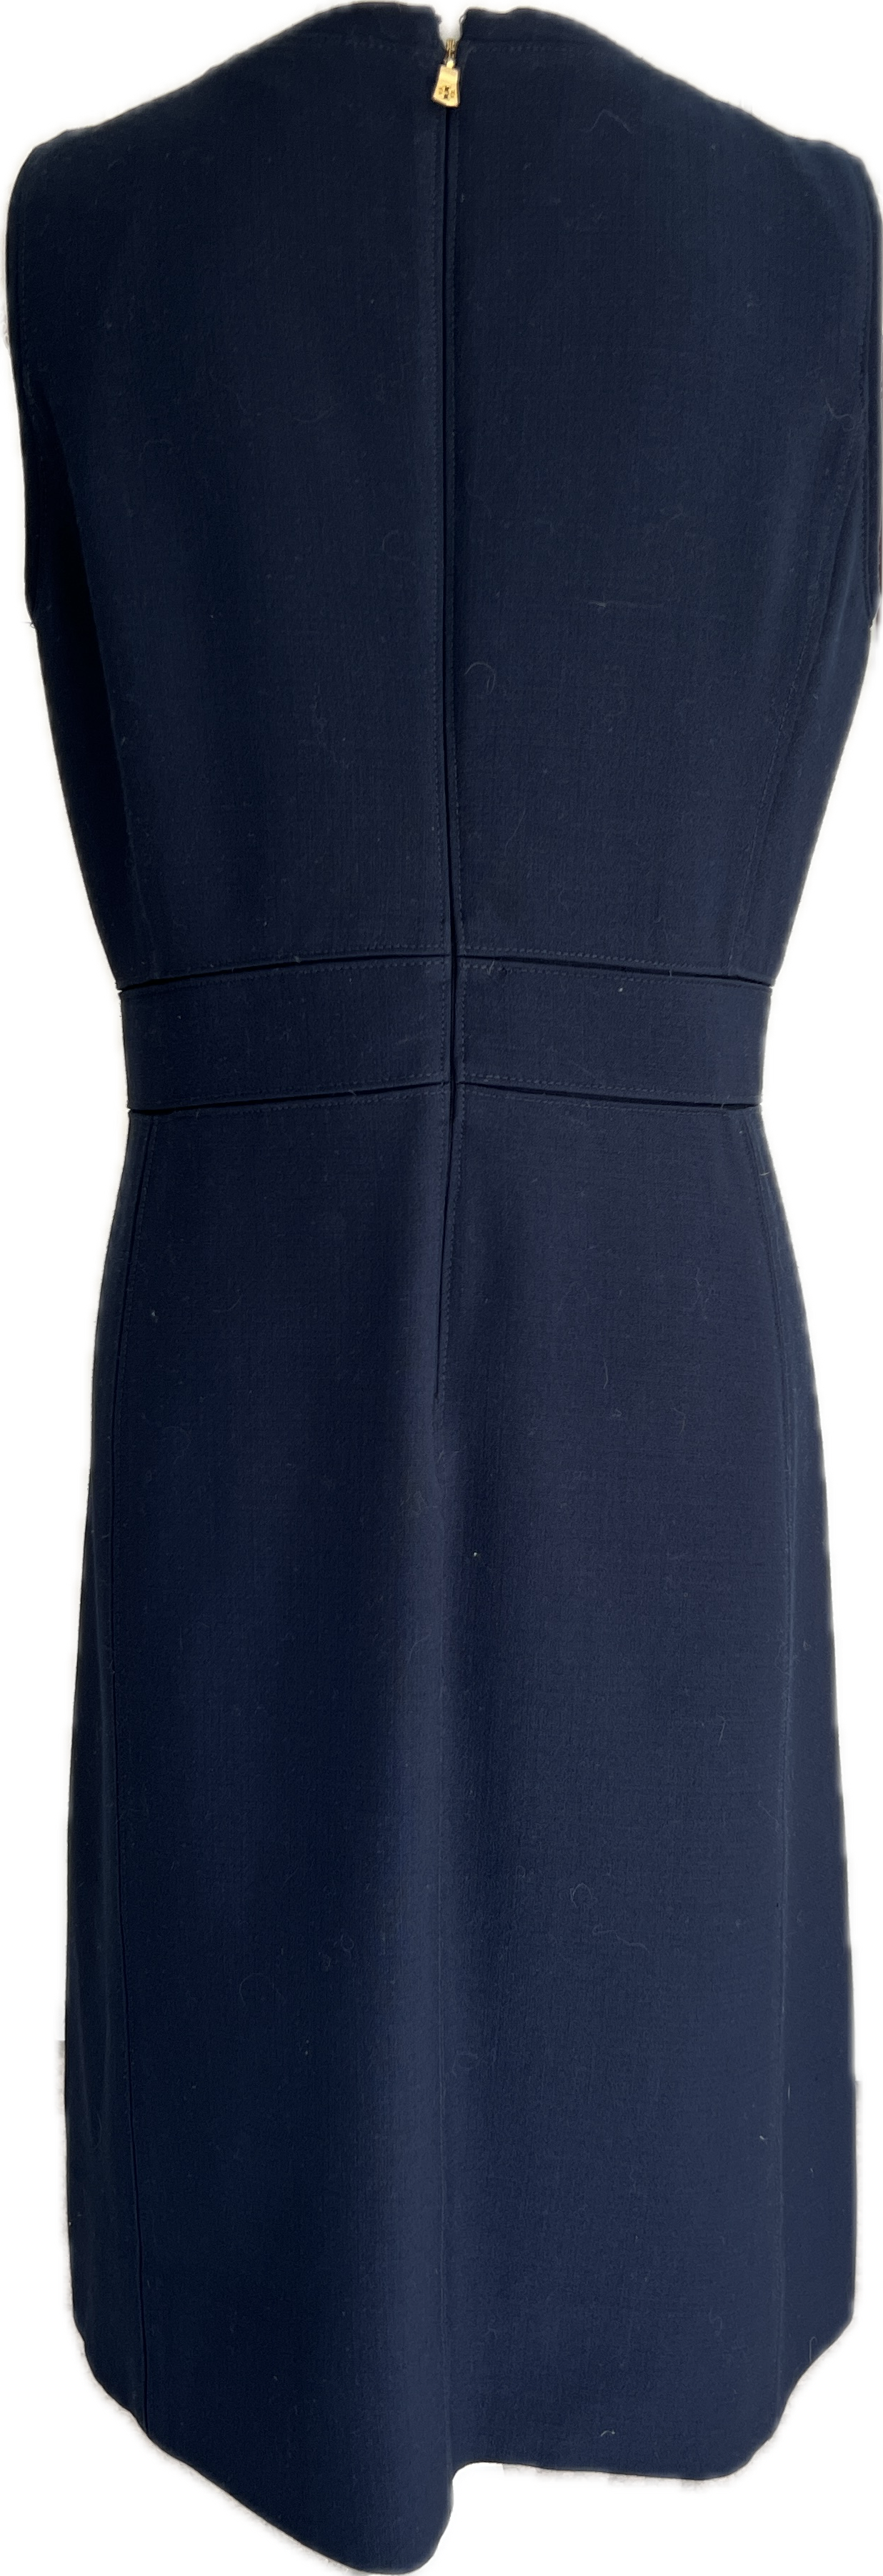 Tory Burch Navy Sleeveless Dress, 8